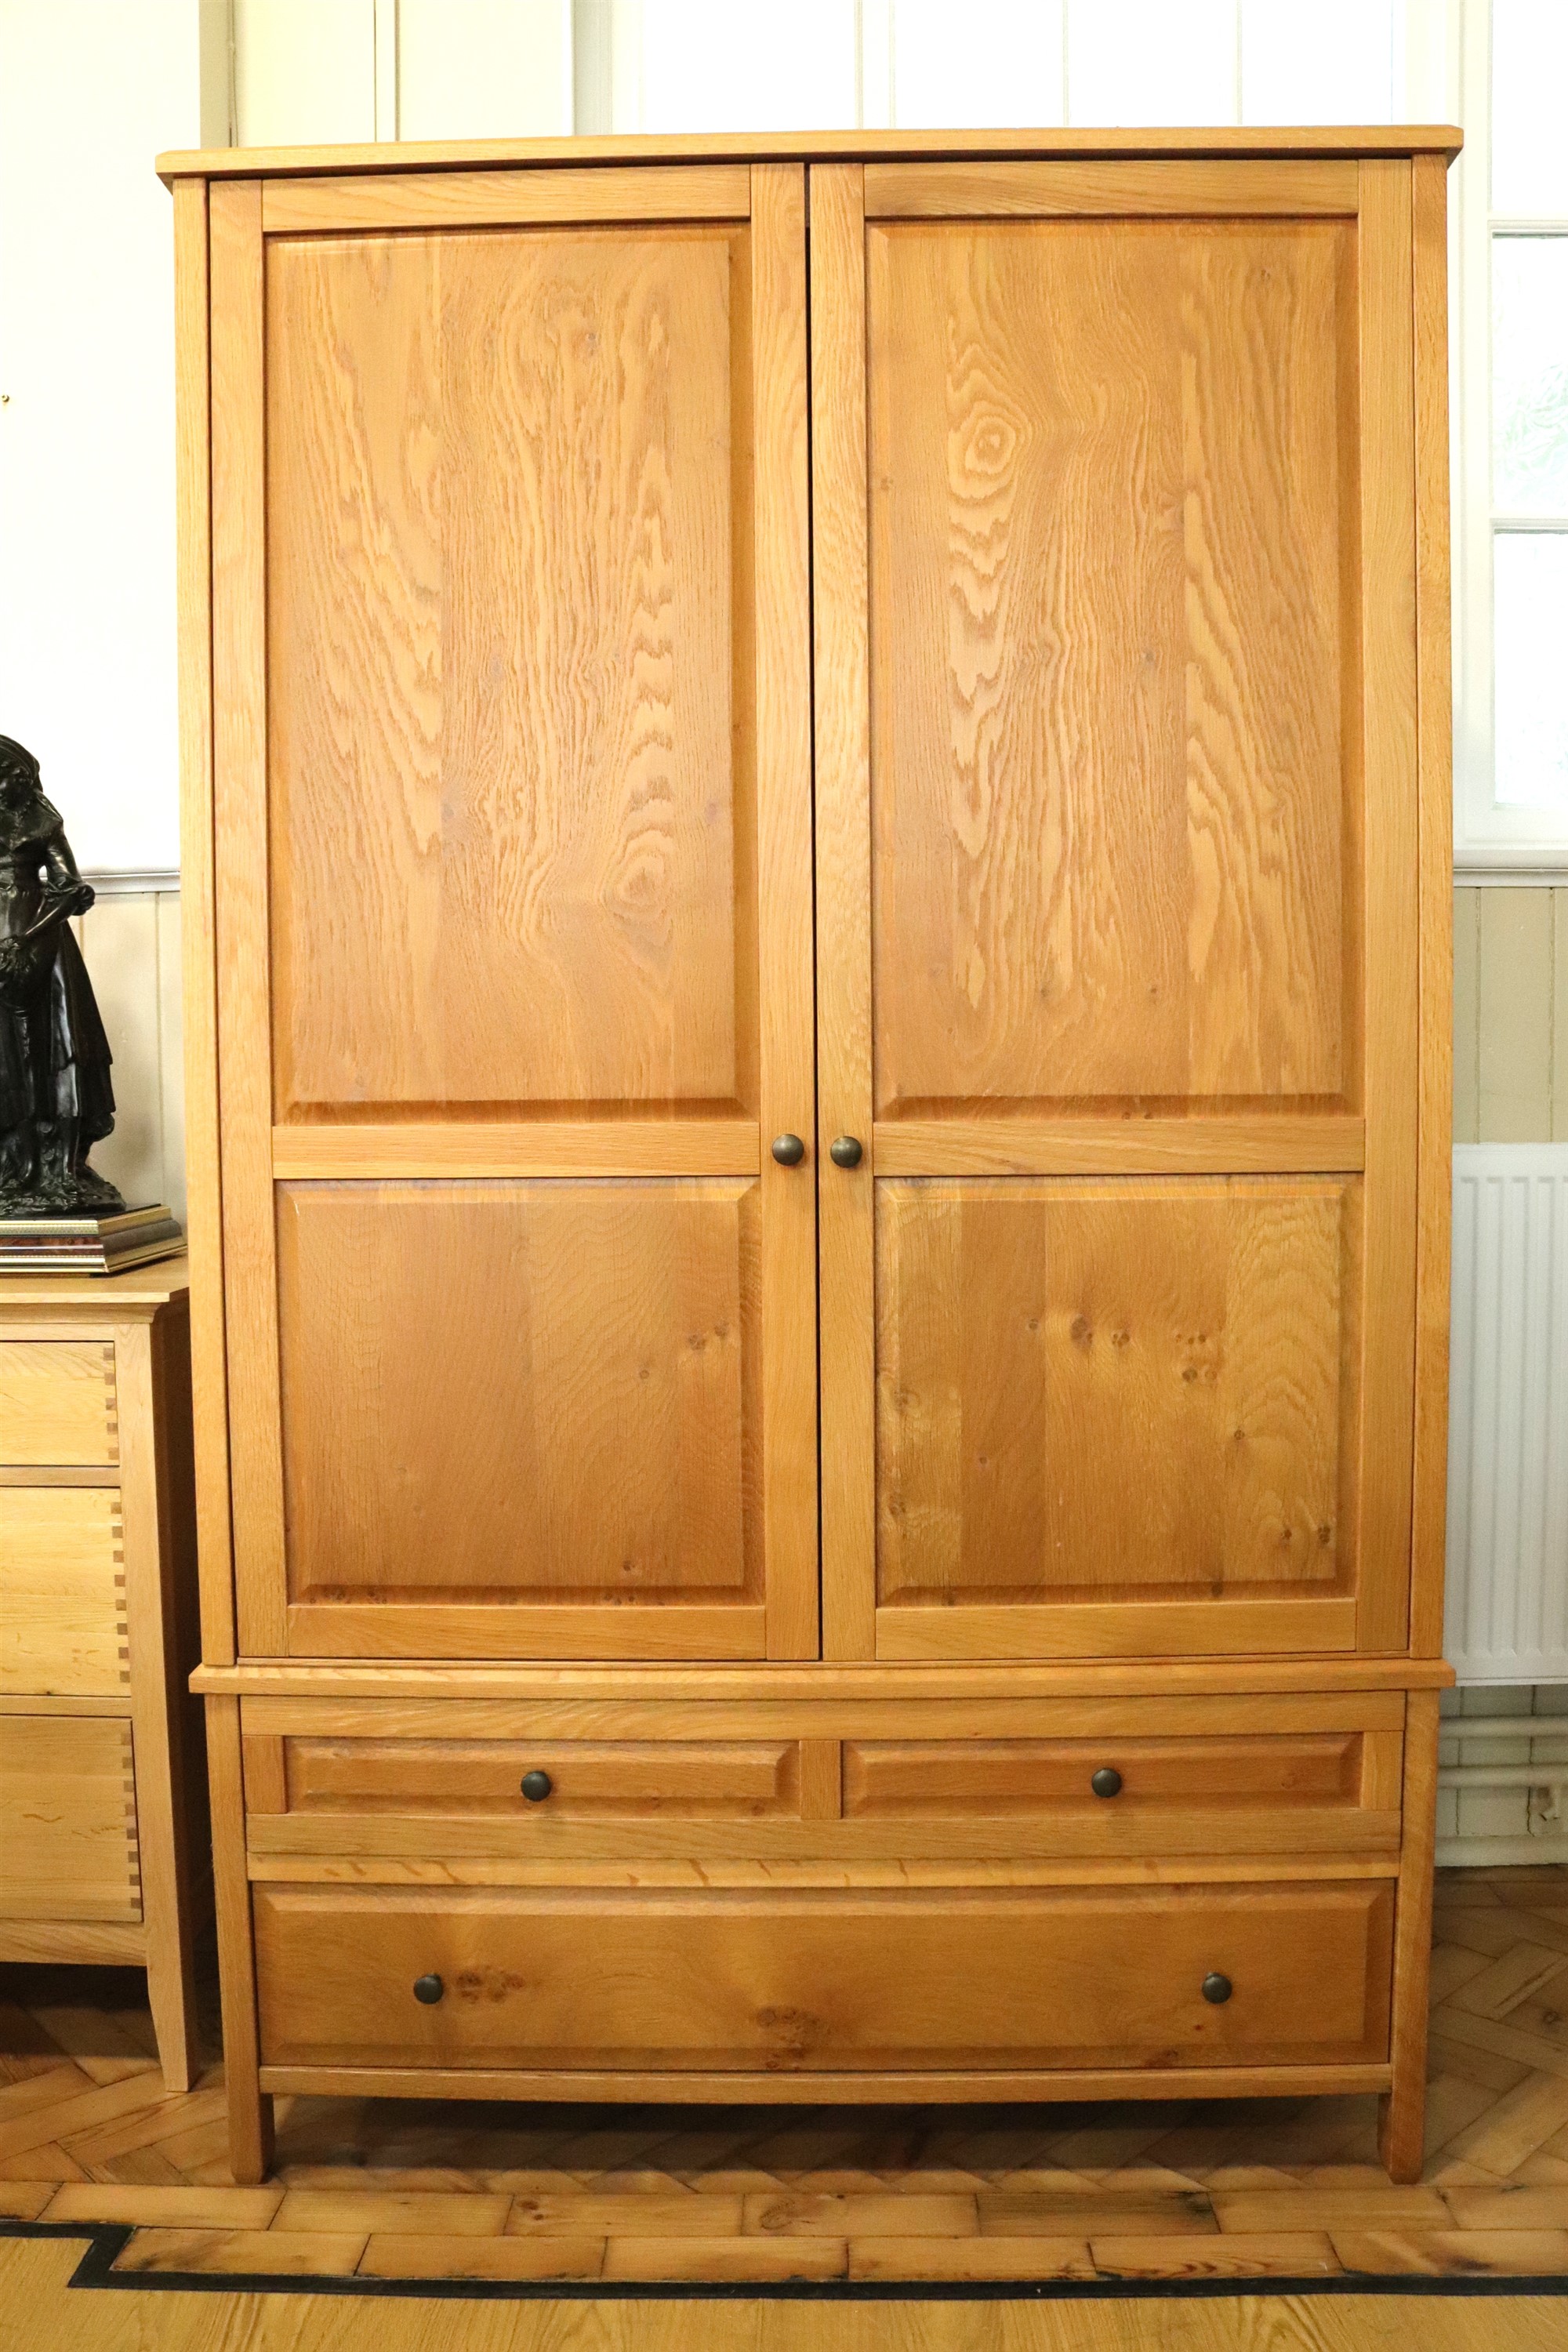 A contemporary blonde oak wardrobe, 62 cm x 120 cm x 196 cm